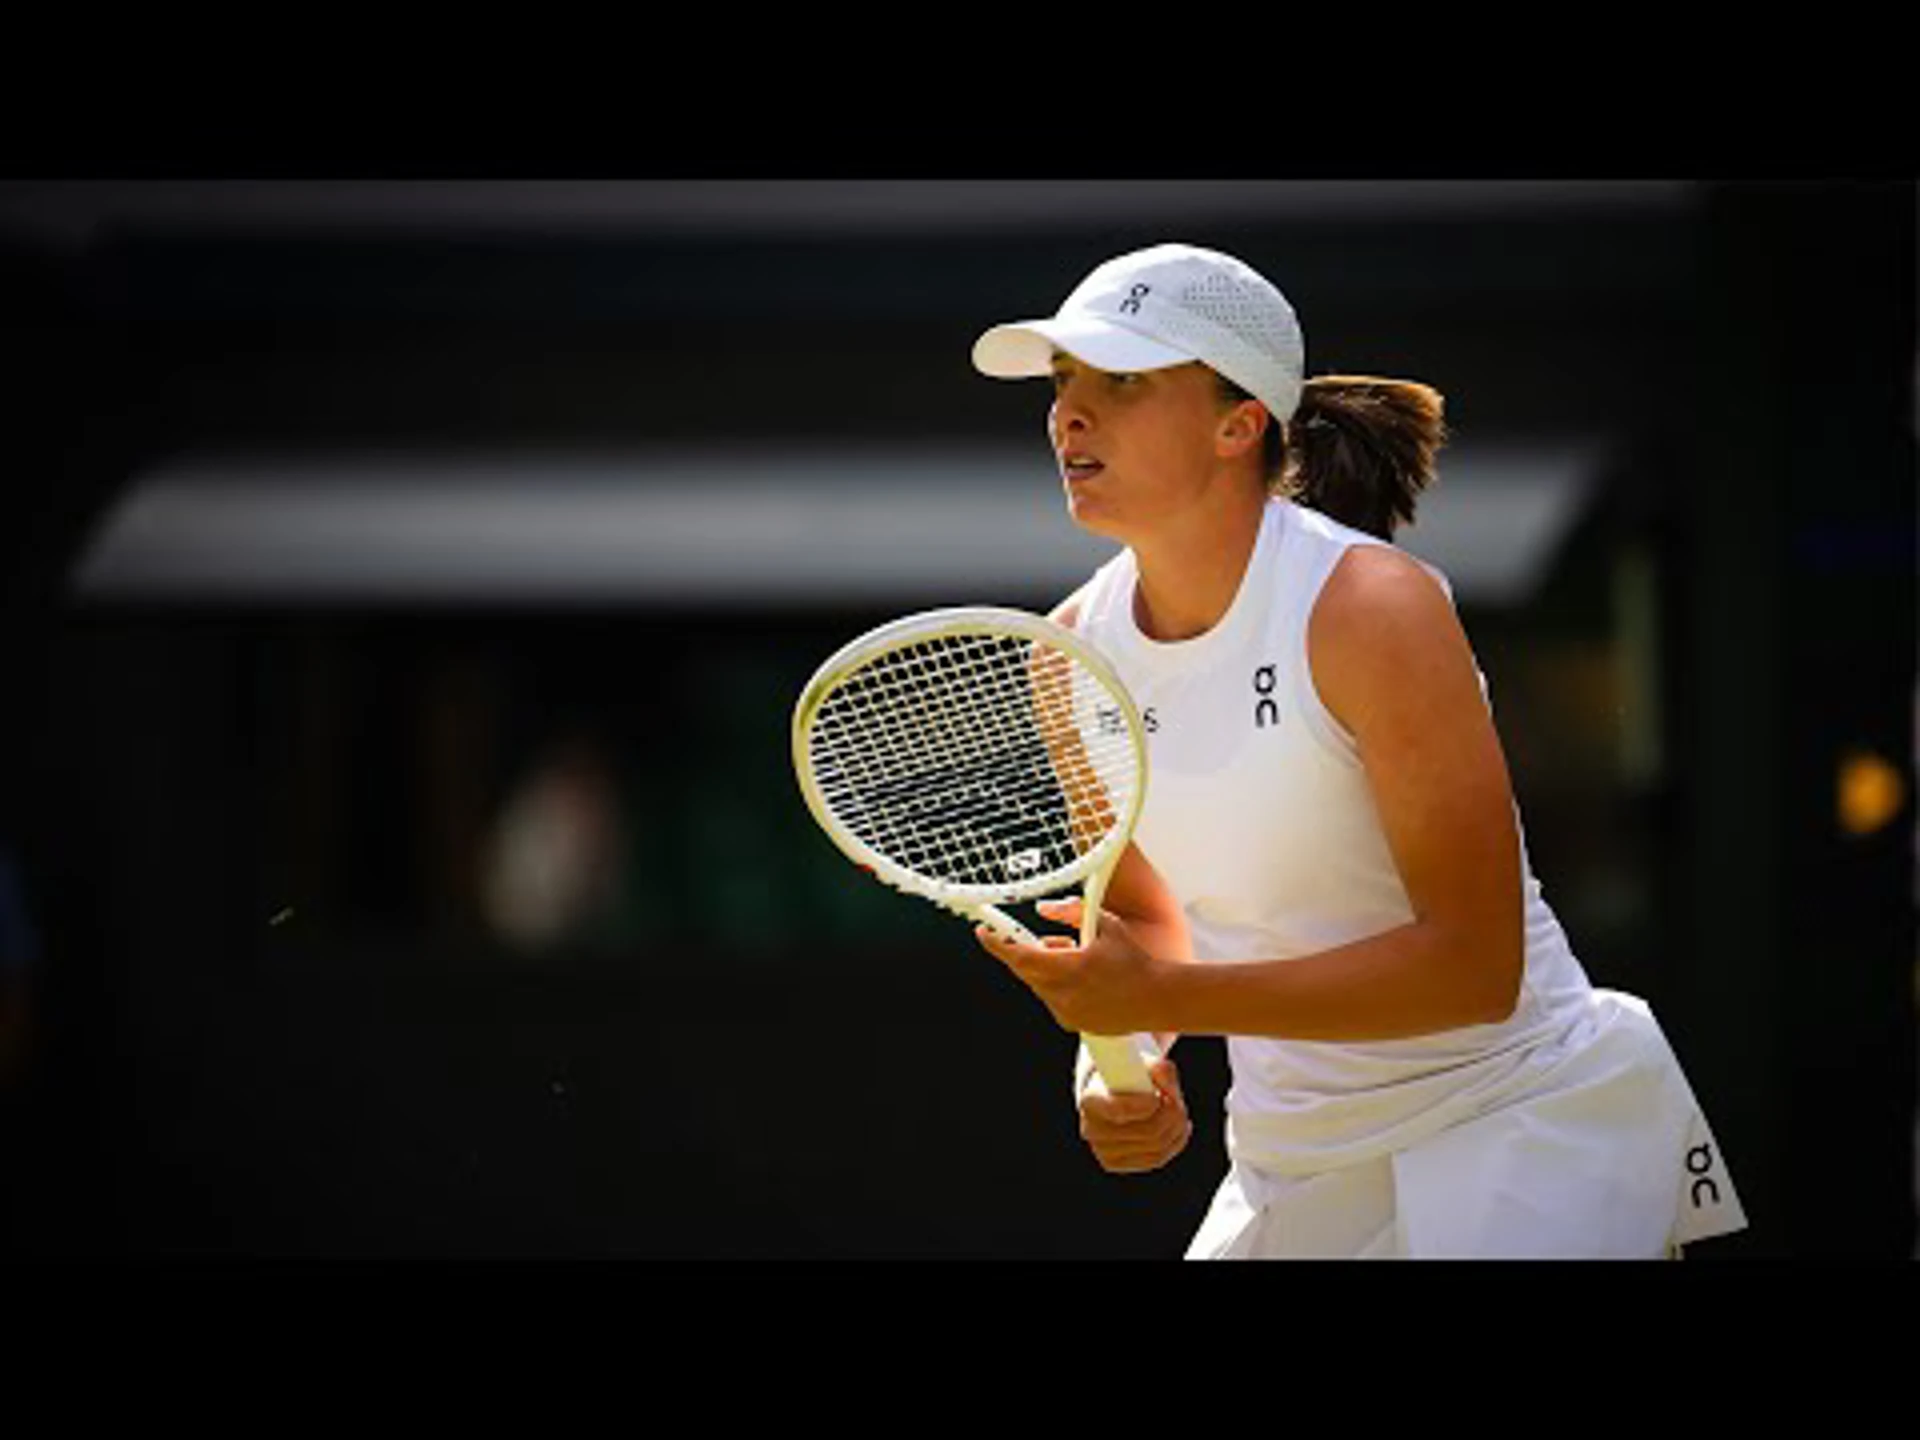 Iga Swiatek v Petra Martic | Women's singles | 2nd Round | Highlights | Wimbledon